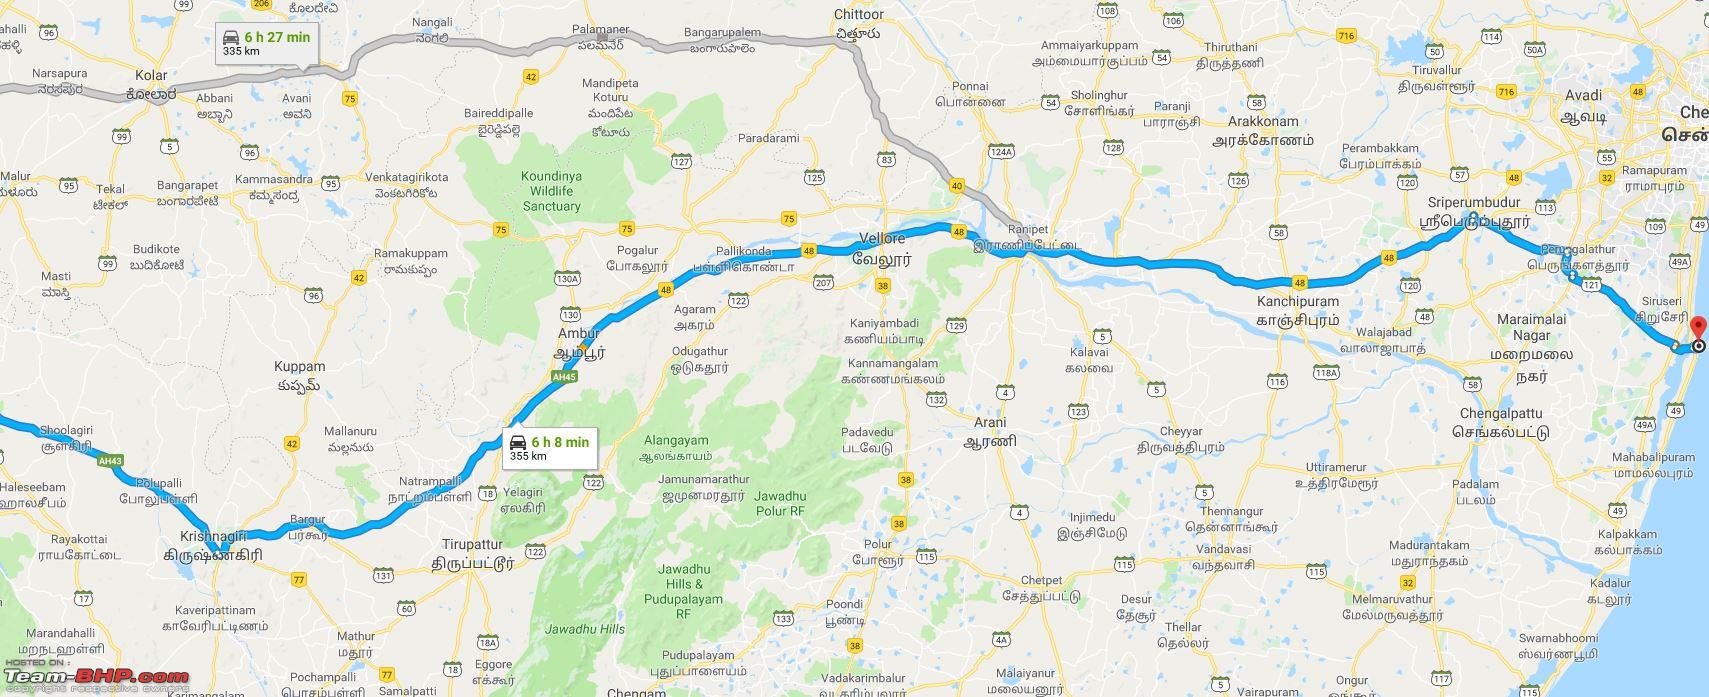 Chennai Bangalore Road Map Bangalore   Chennai   Bangalore : Route Queries   Page 199   Team BHP